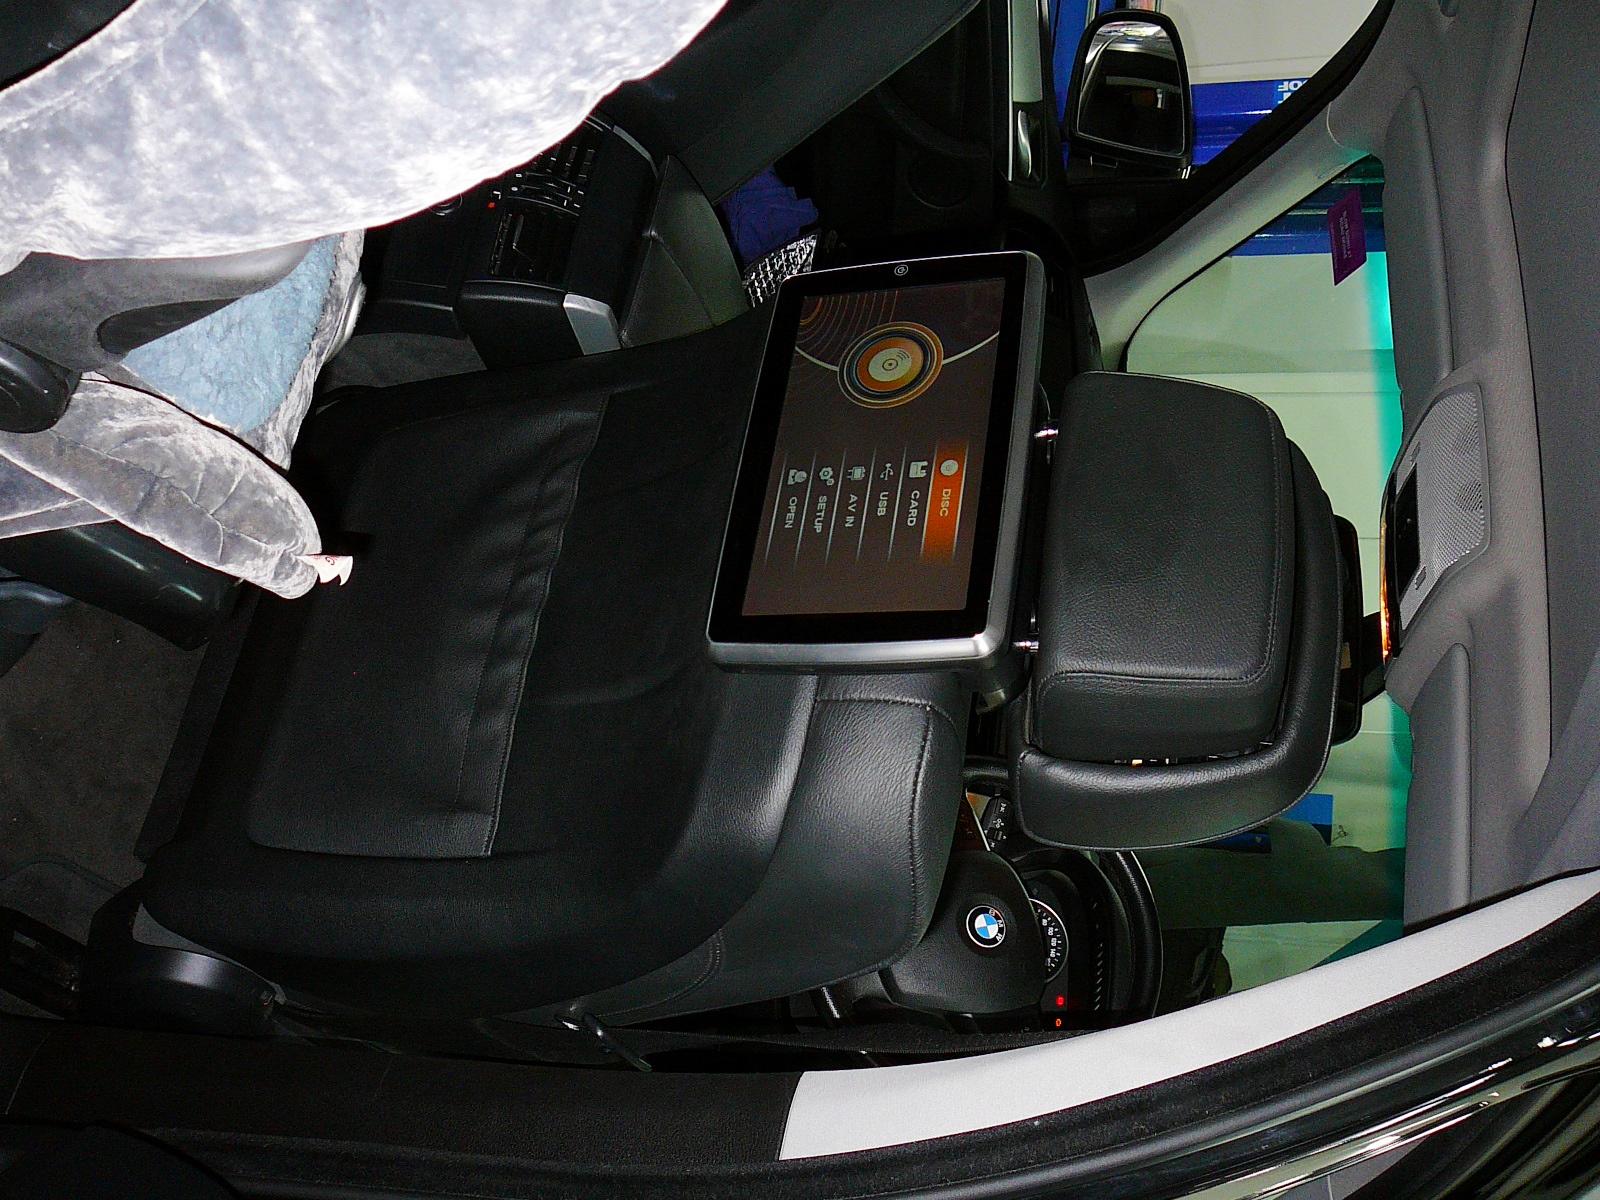 BMW X5 2008, Installation of Opal HR10A DVD Headrest Screens